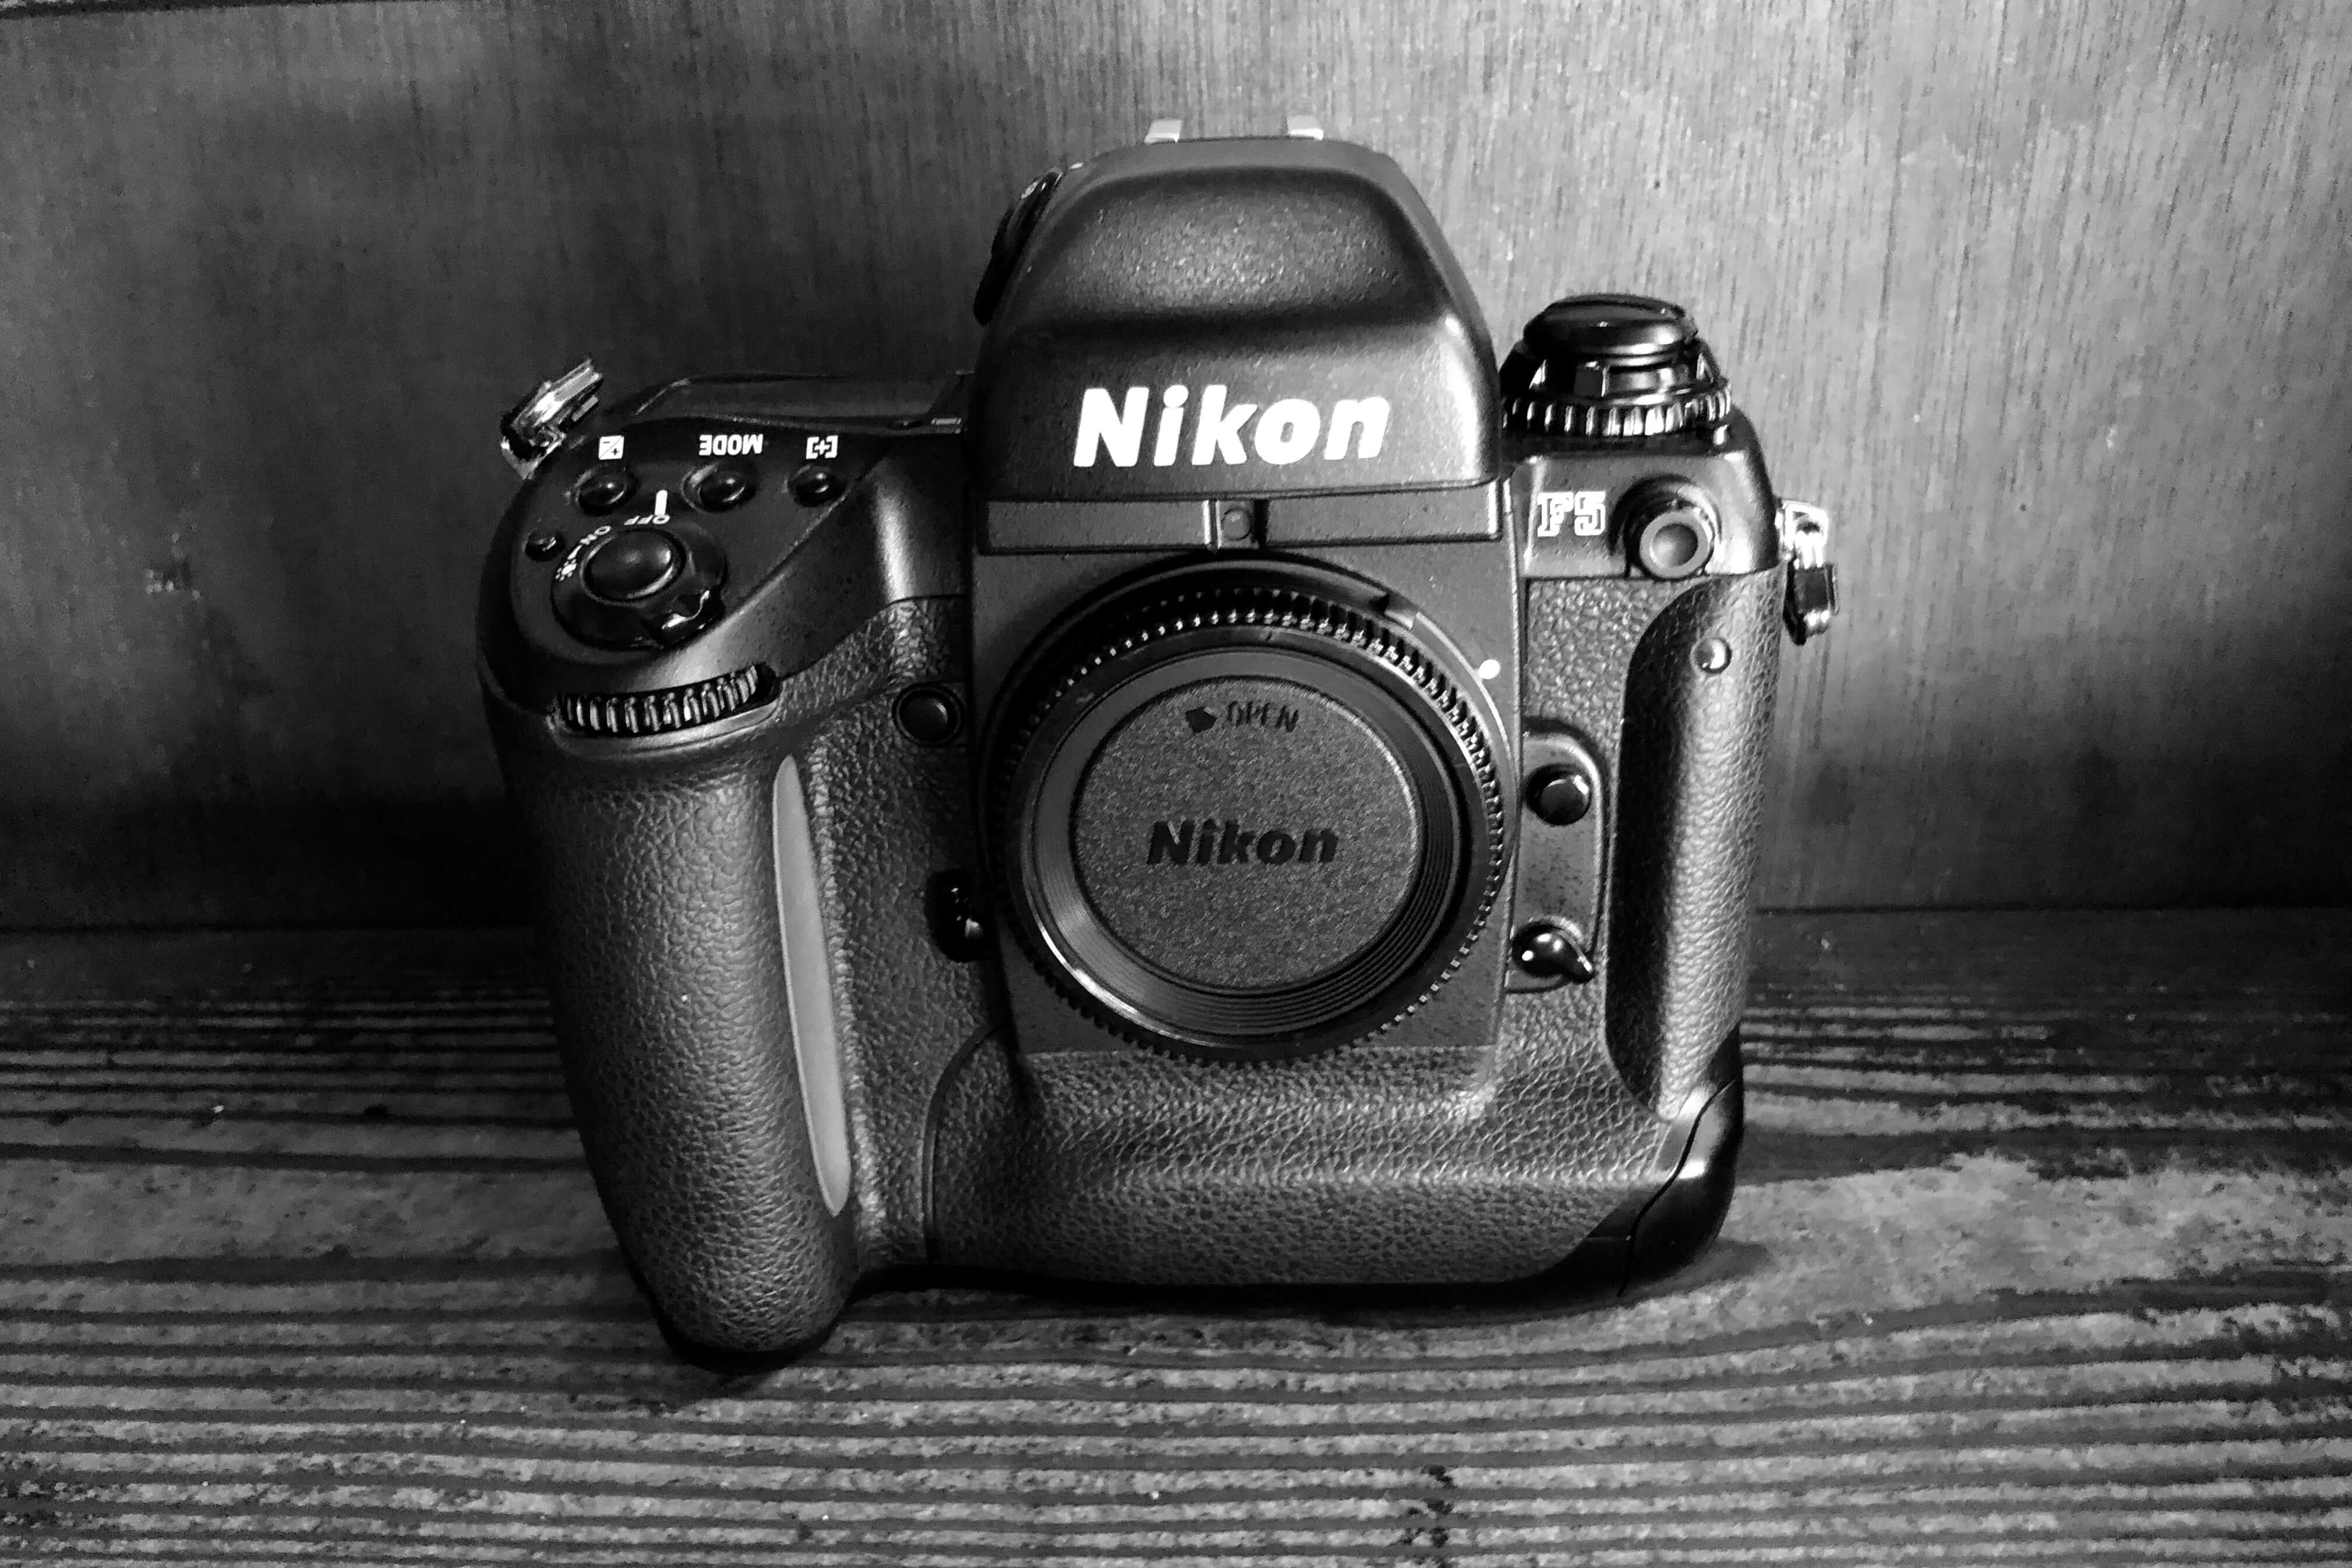 Nikon F5 (フィルムカメラ) - www.sorbillomenu.com